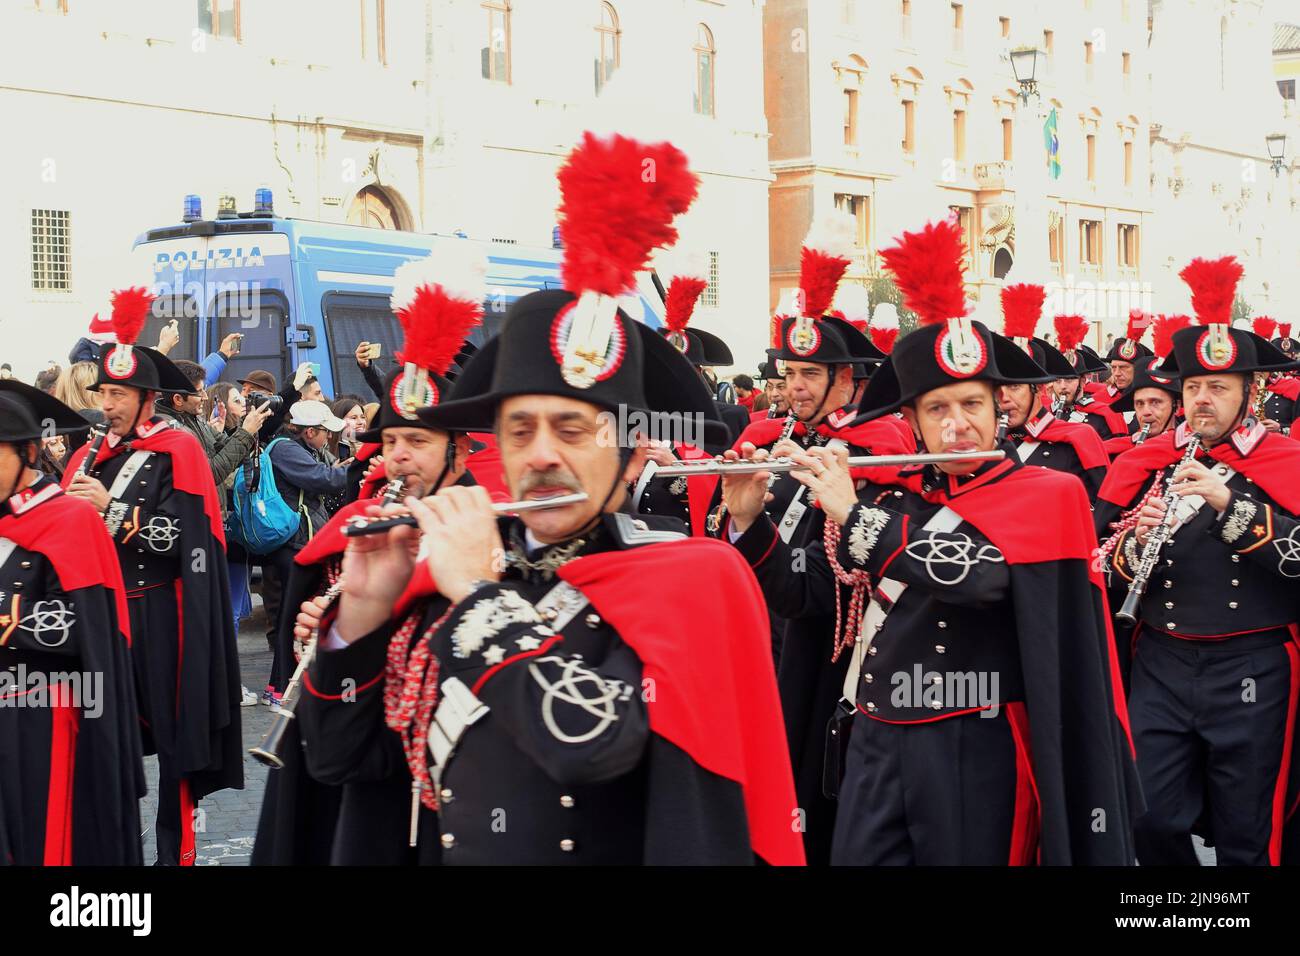 Musiker Parade spielen Musikinstrument Flöte, Rom, Latium, Italien, Europa, Italienisch, Europäisch Stockfoto